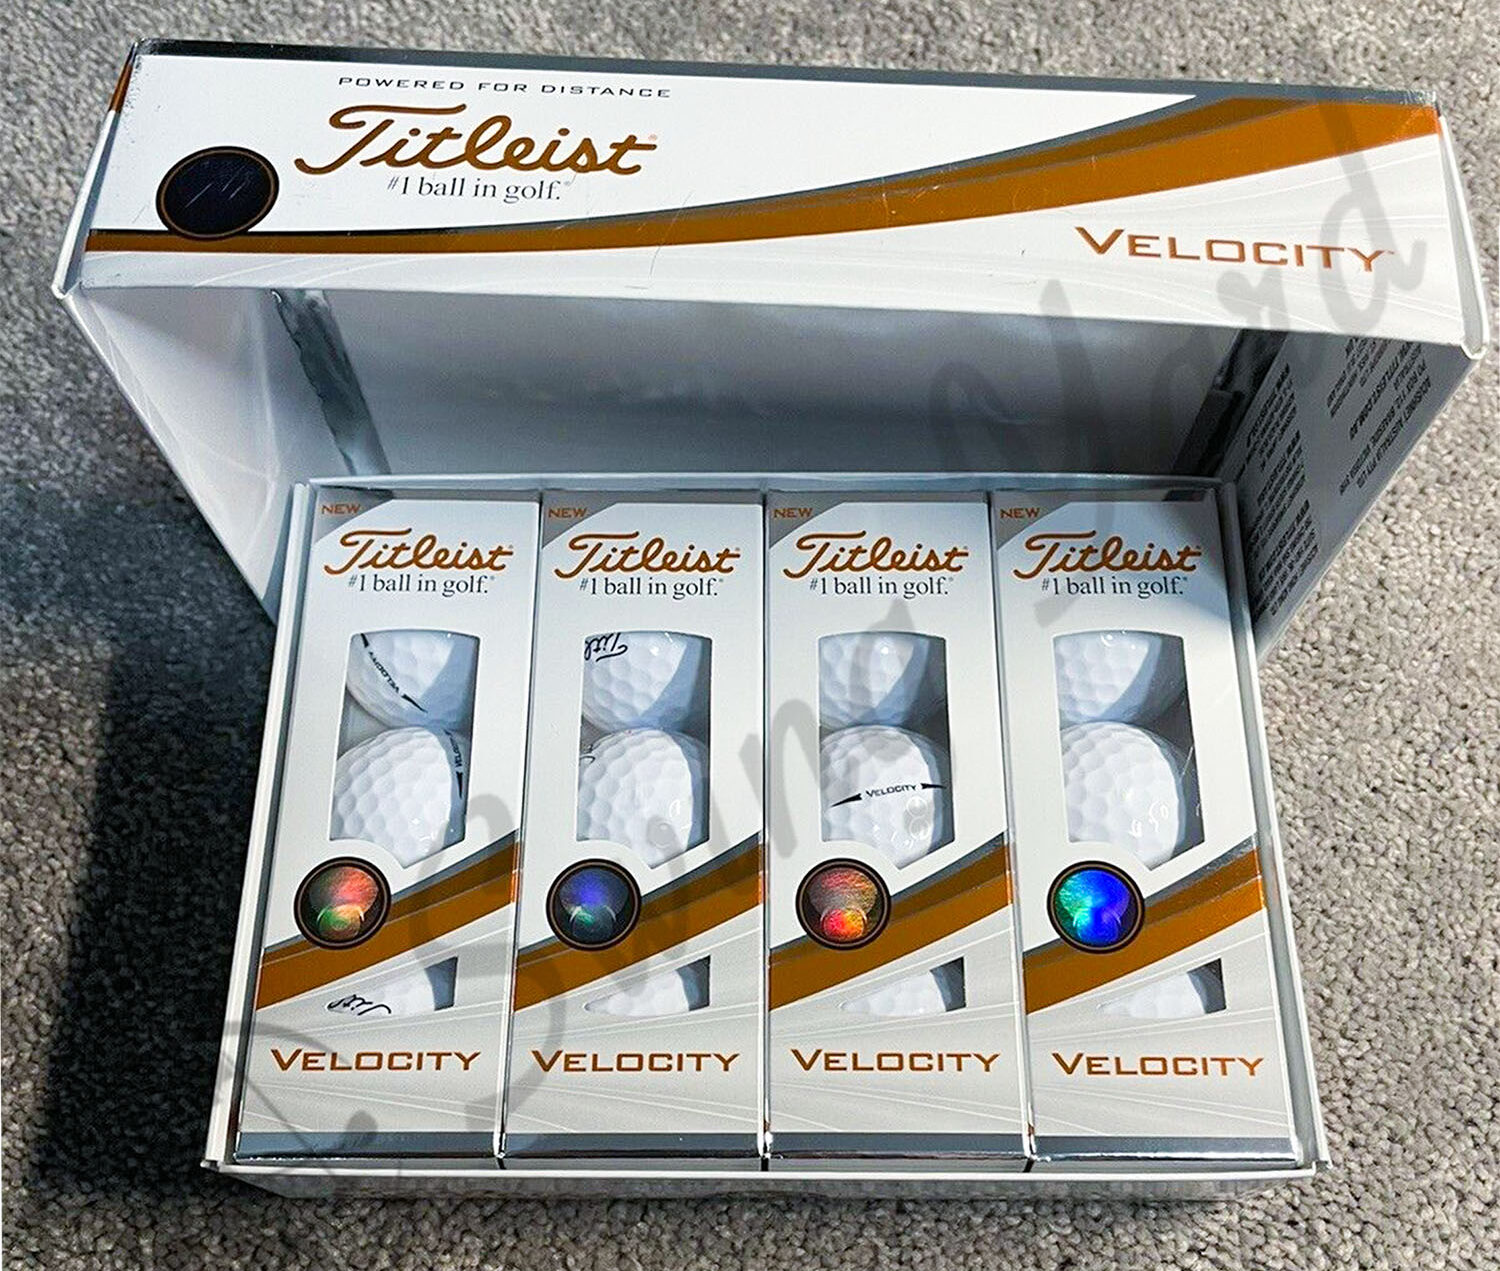 The 4 single packs inside of Titleist Velocity box on the floor